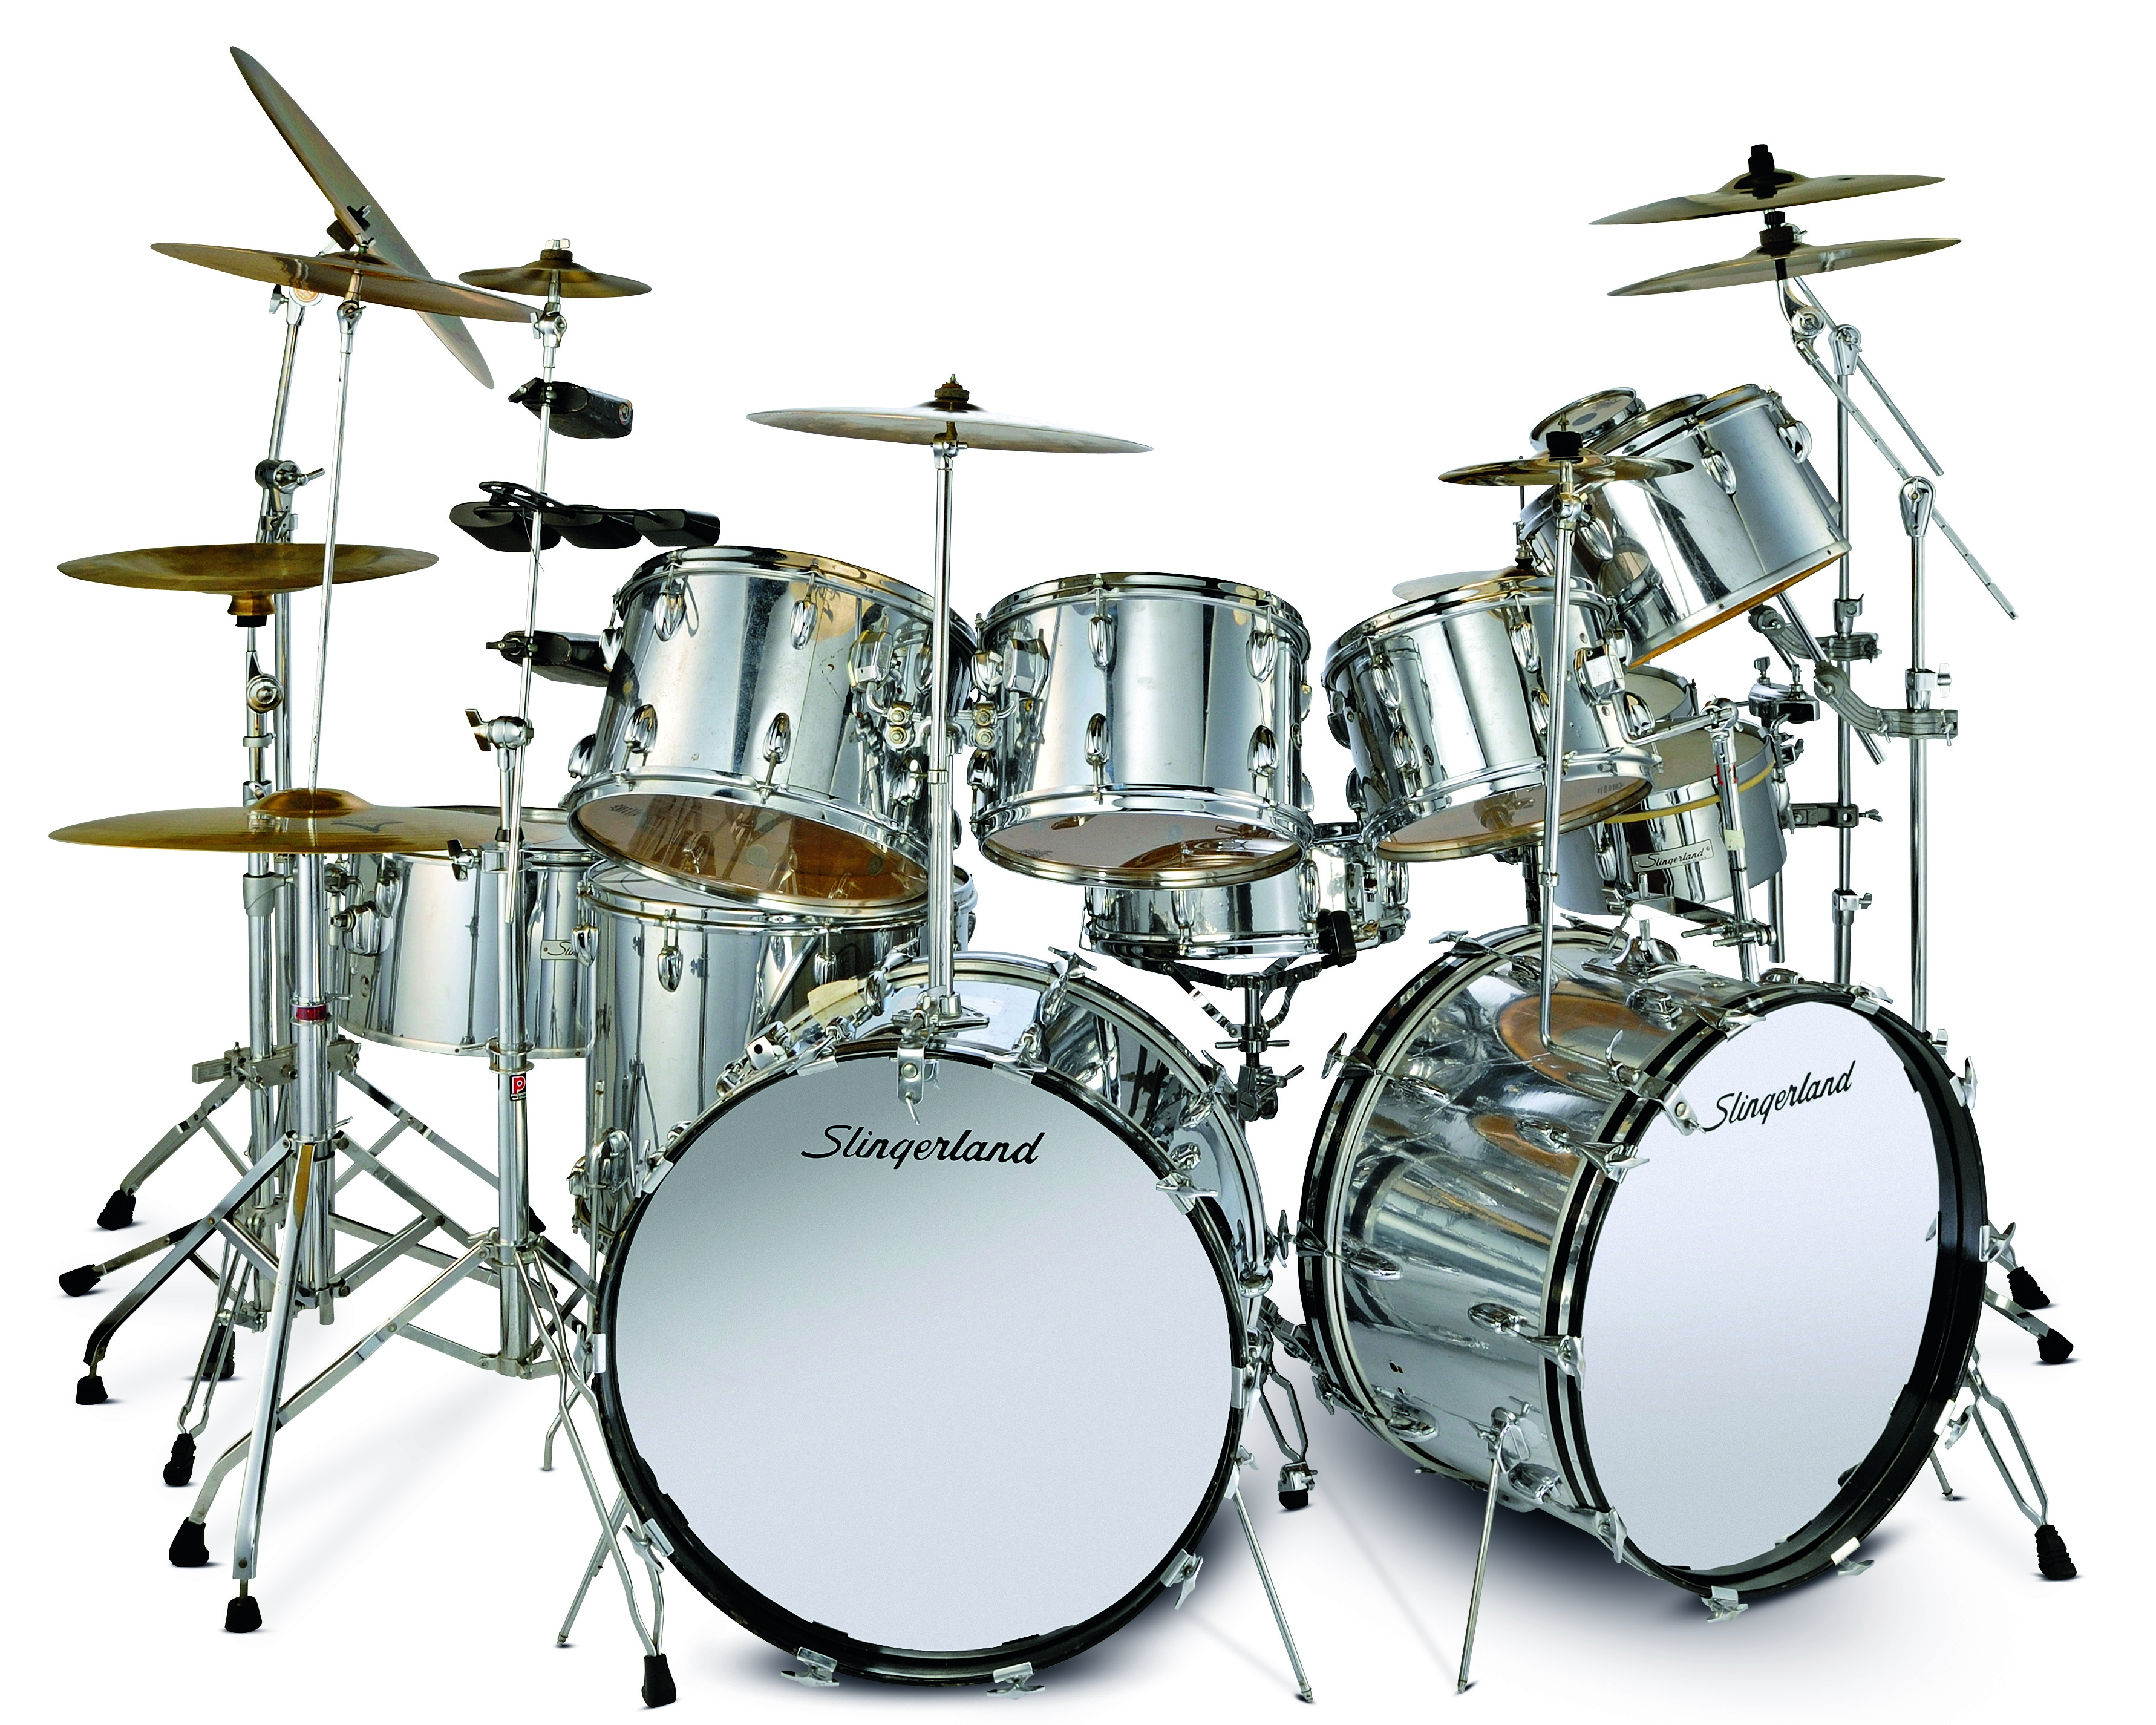 Sam Kesteven39;s drum kits